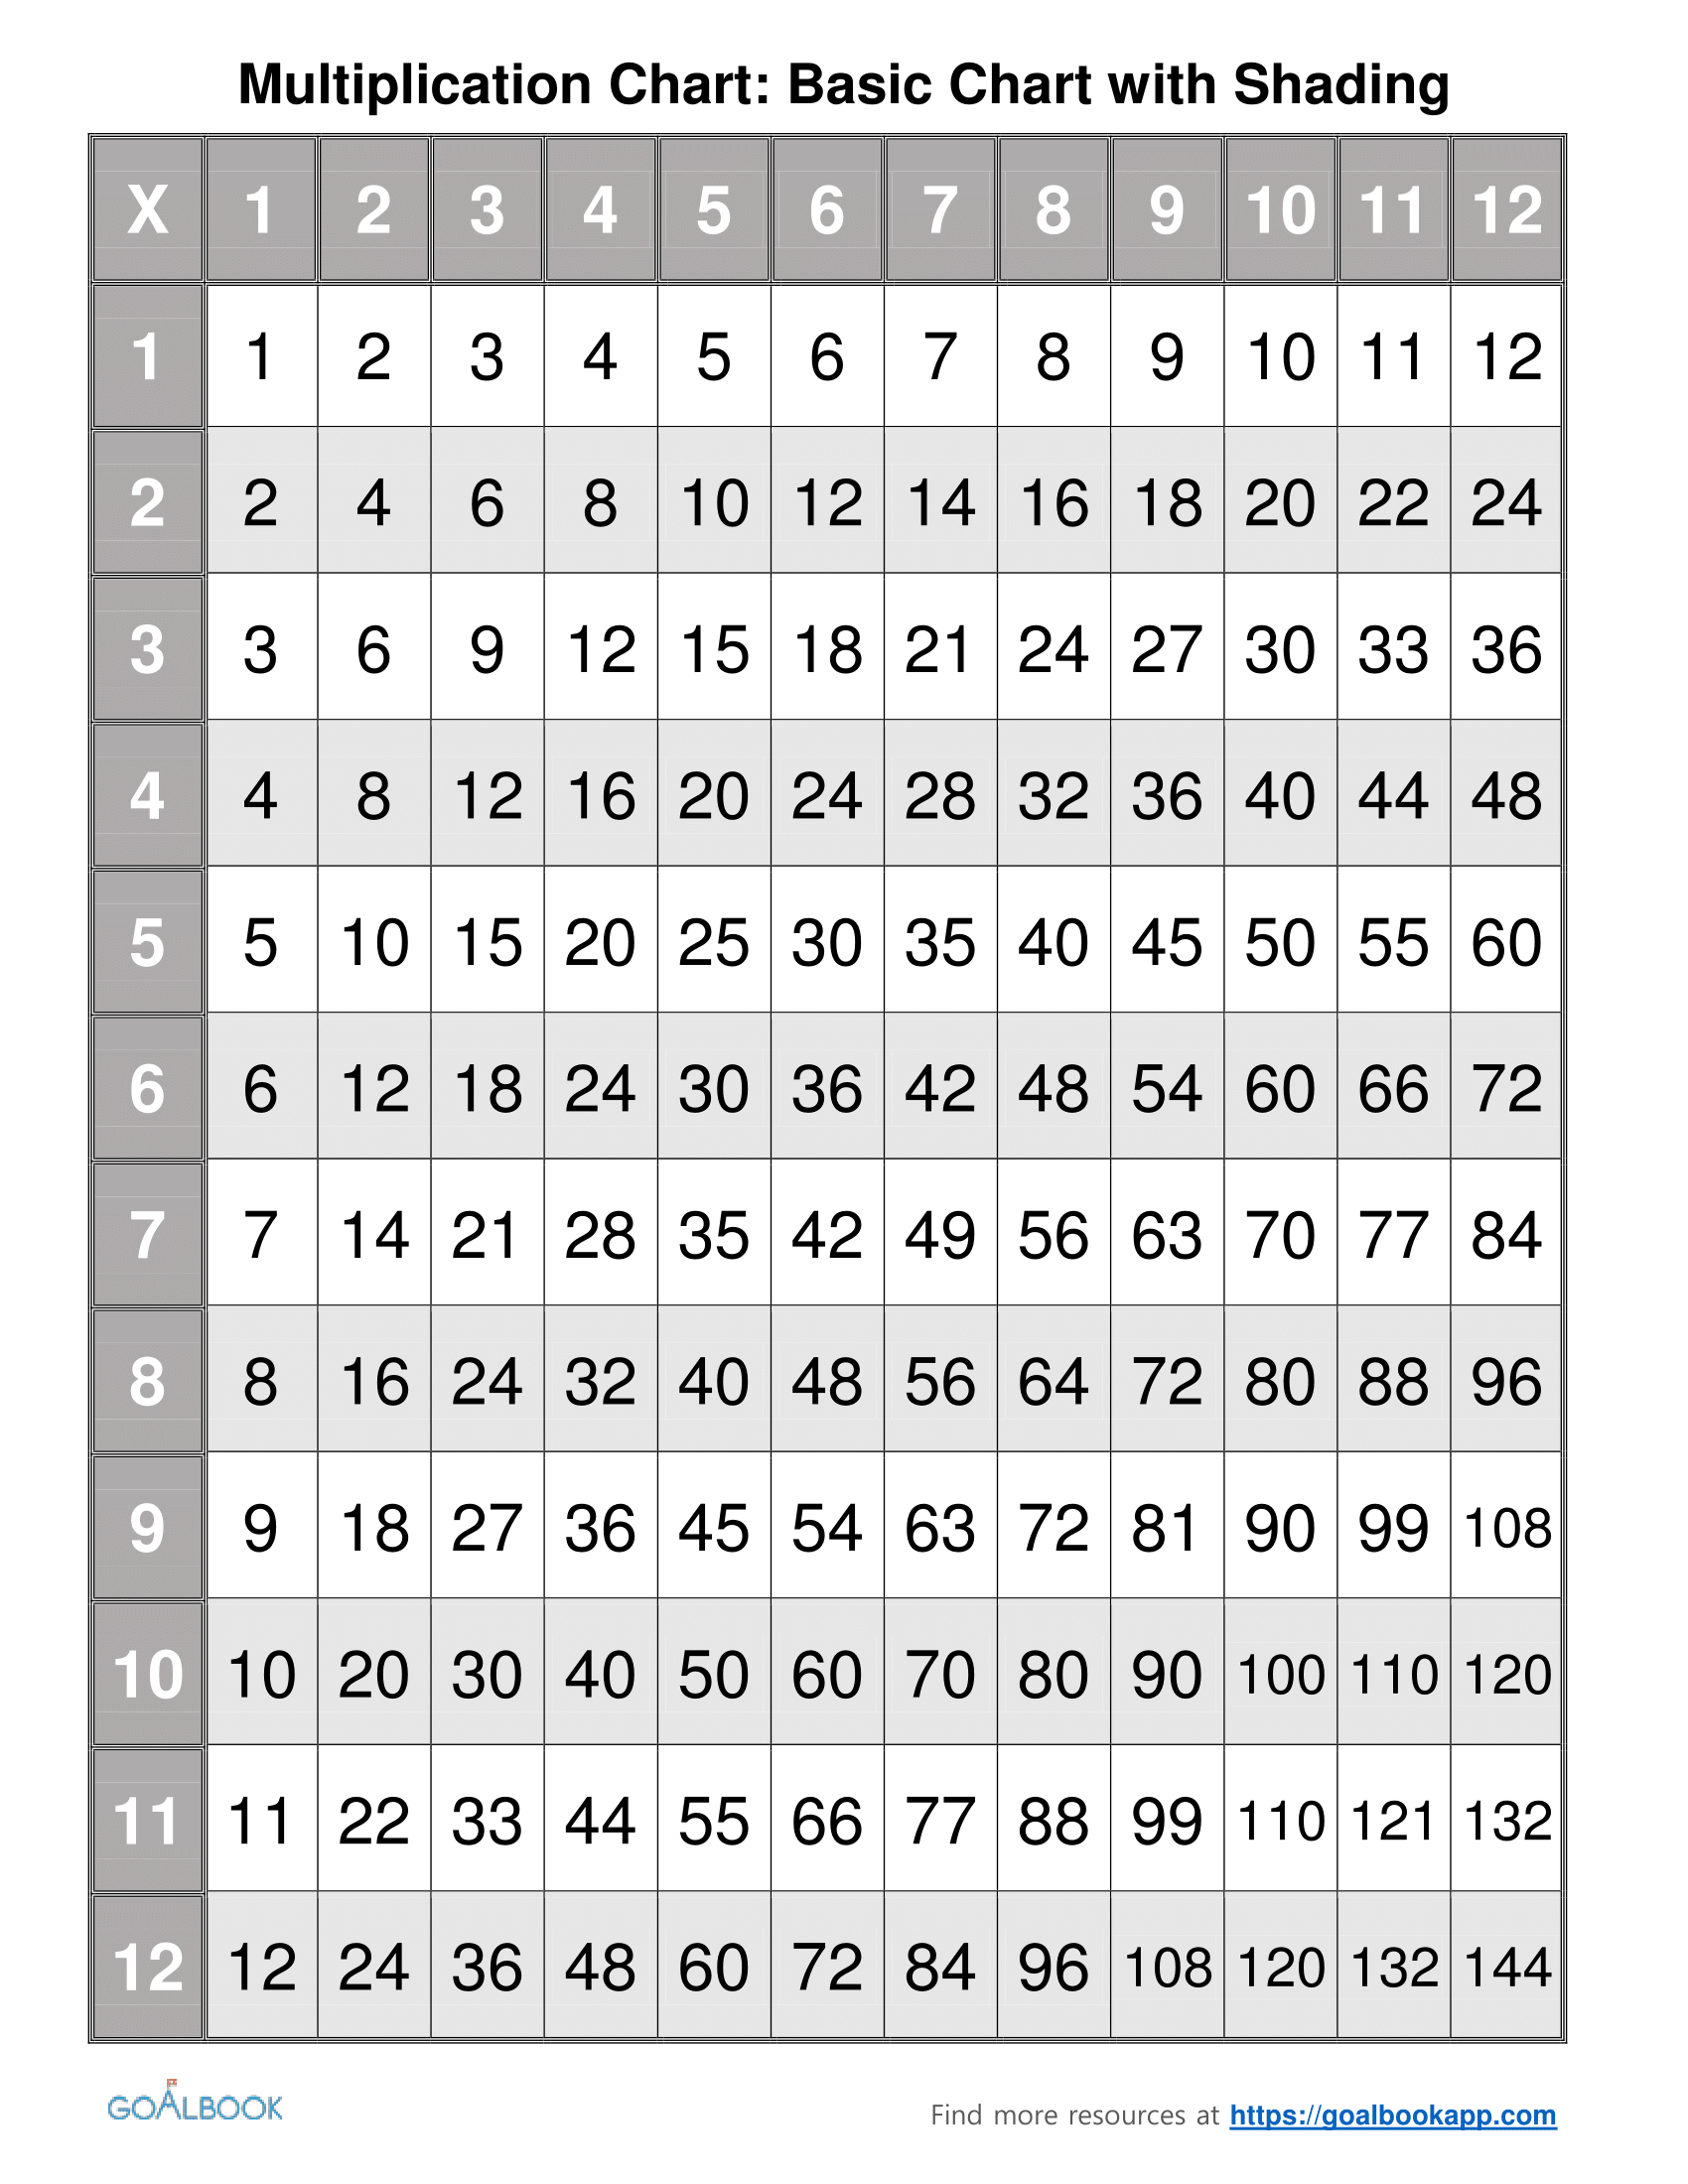 9x9 Multiplication Table